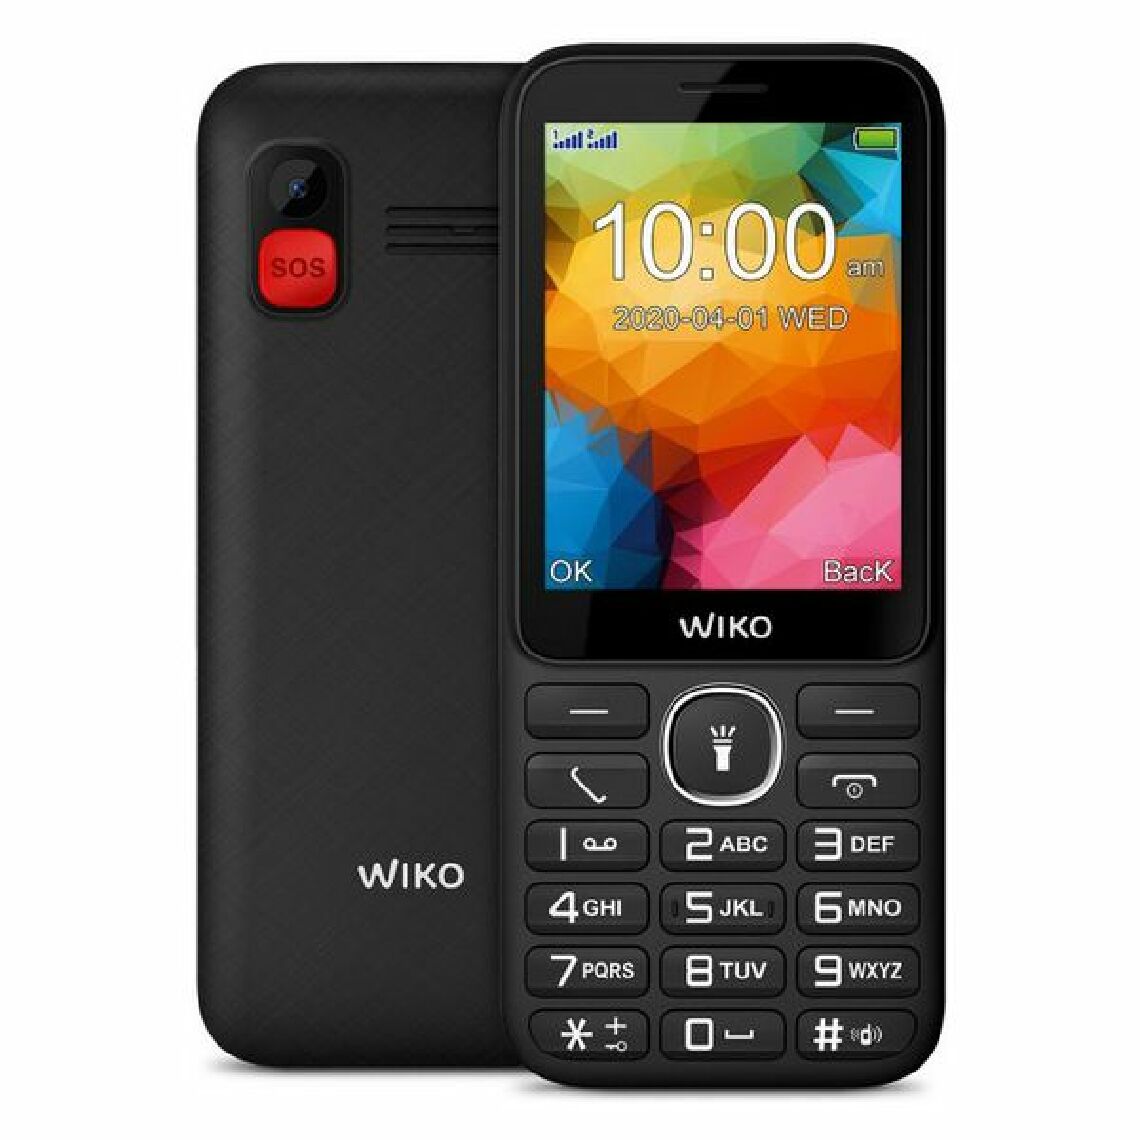 Wiko Mobile - Smartphone WIKO MOBILE F200 2.8" DUAL SIM NEGRO - Smartphone Android